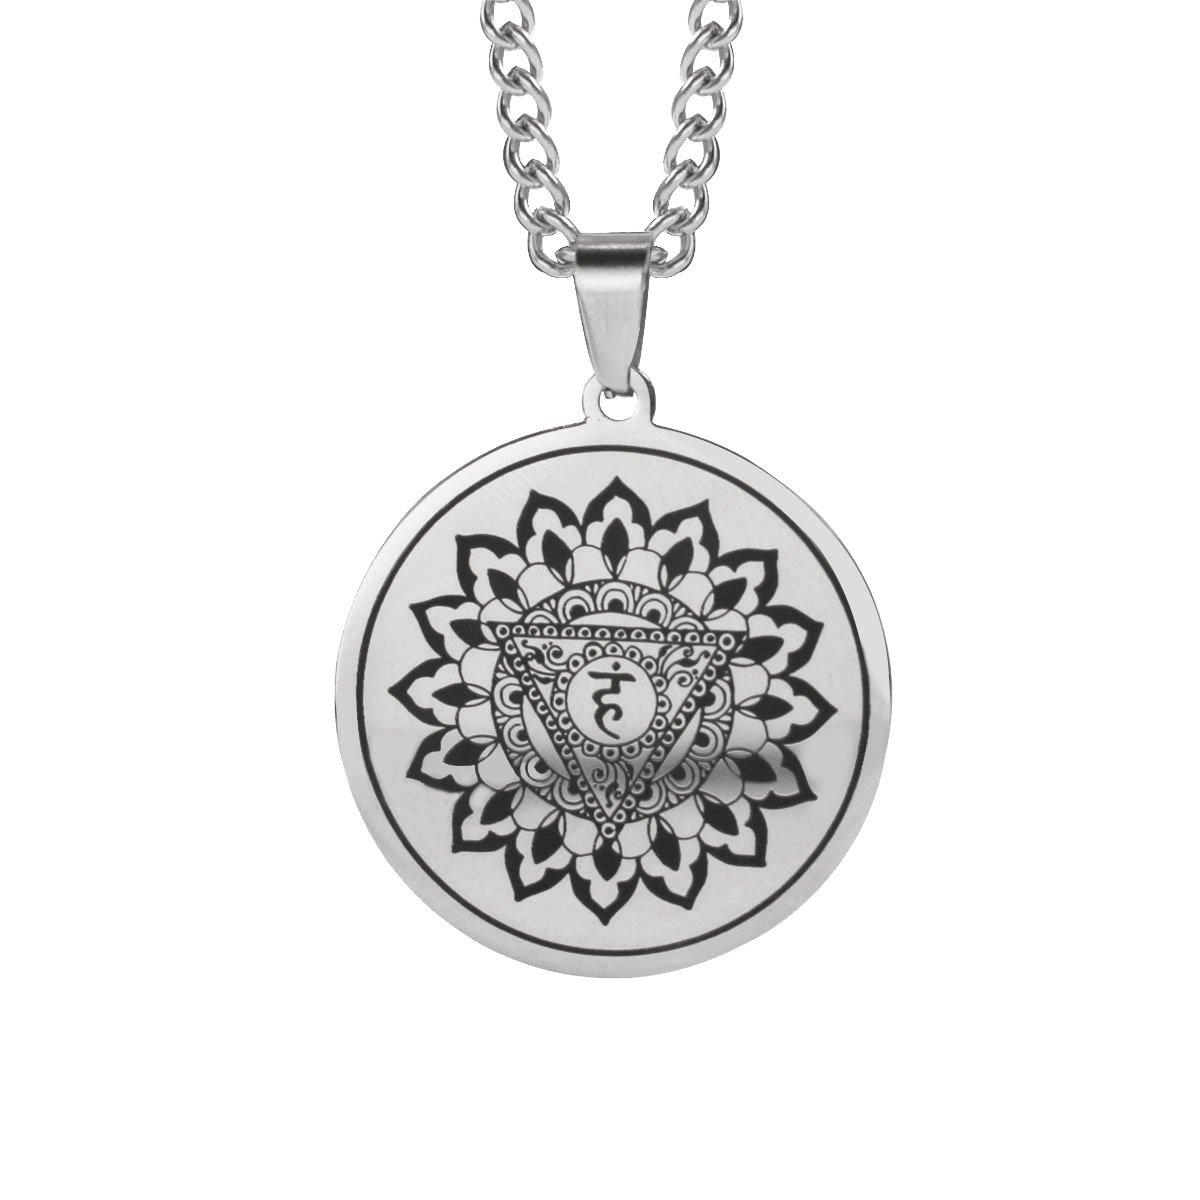 Keel Chakra (Vishuddha) Ketting - Zilverkleurig Talisman - Roestvrij Staal - Spiritueel Cadeau - Pax Amare